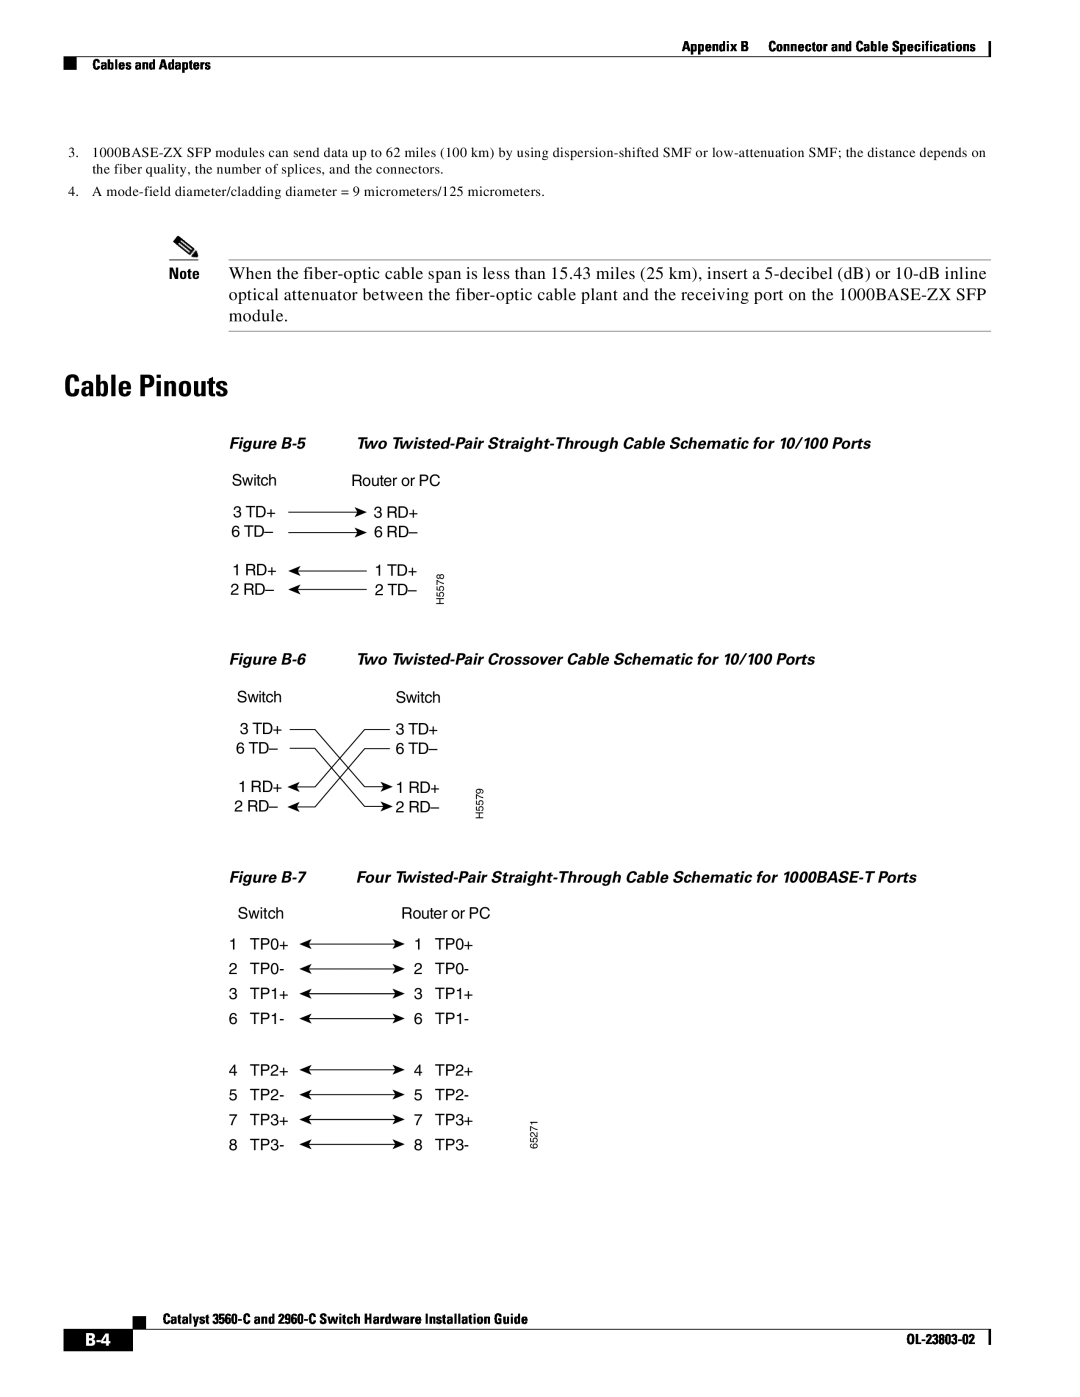 Cisco Systems 3560-C manual Cable Pinouts, Figure B-5, Figure B-6, Figure B-7 